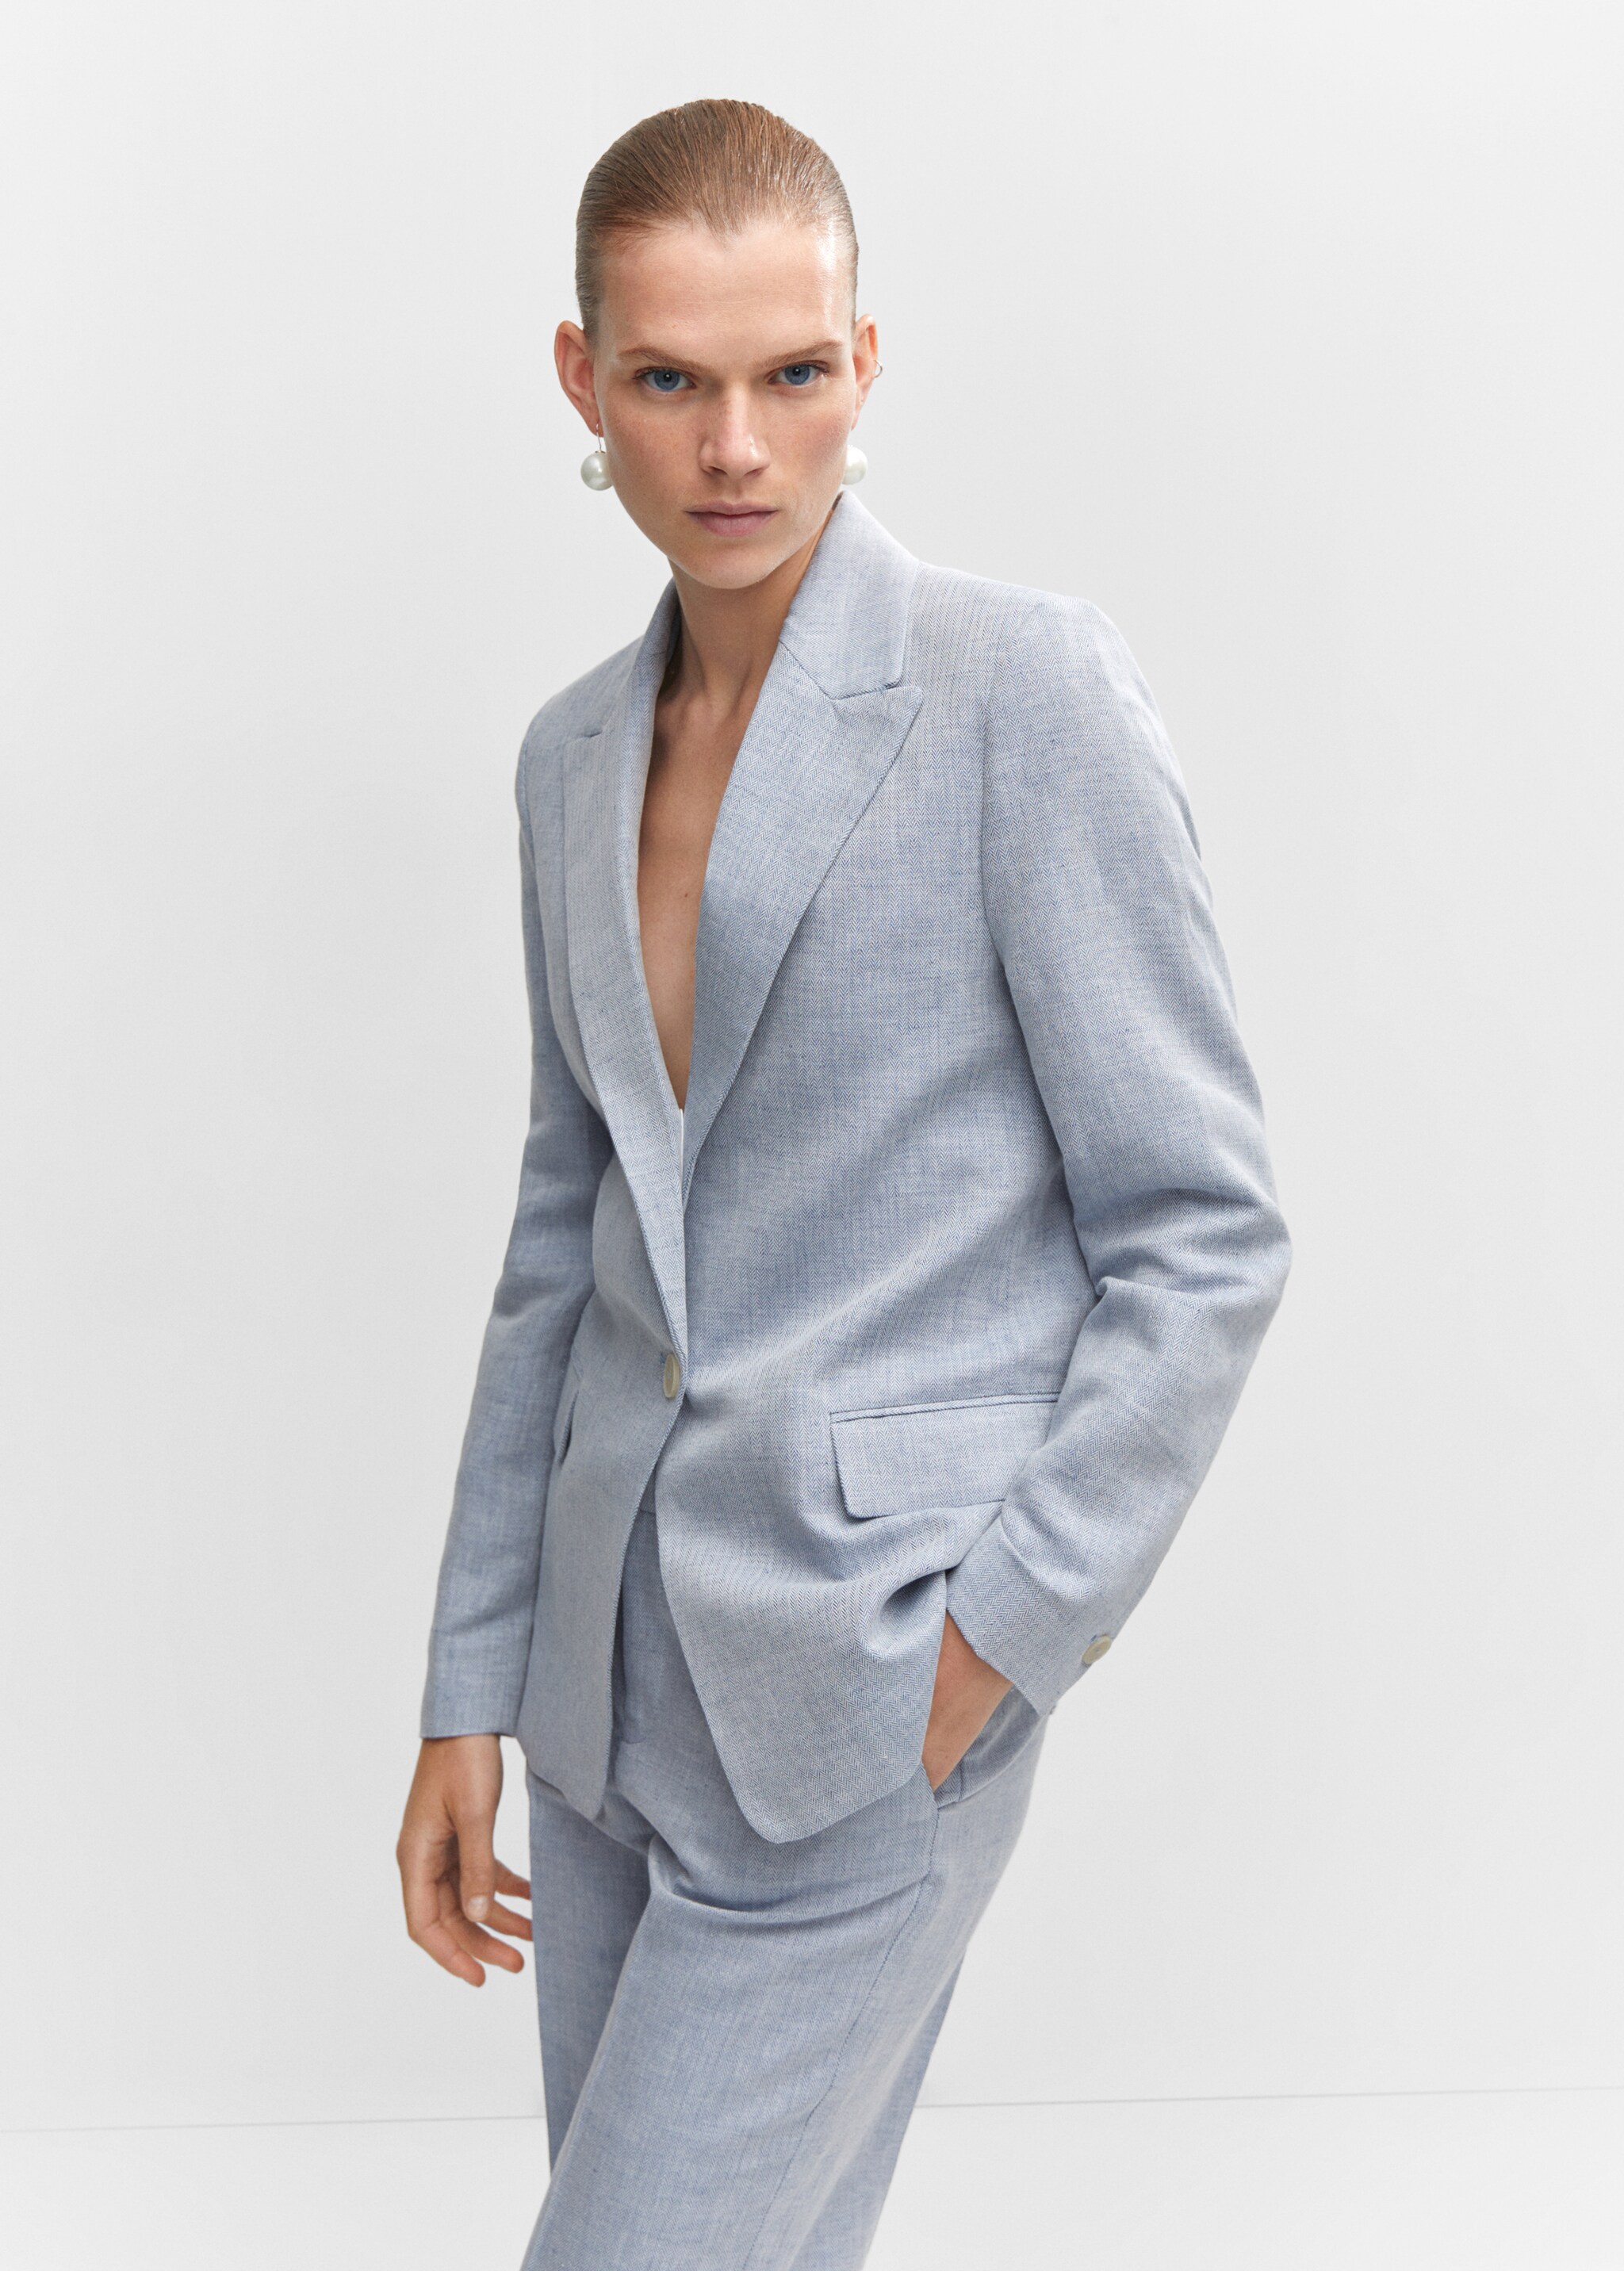 Linen blazer suit - Medium plane